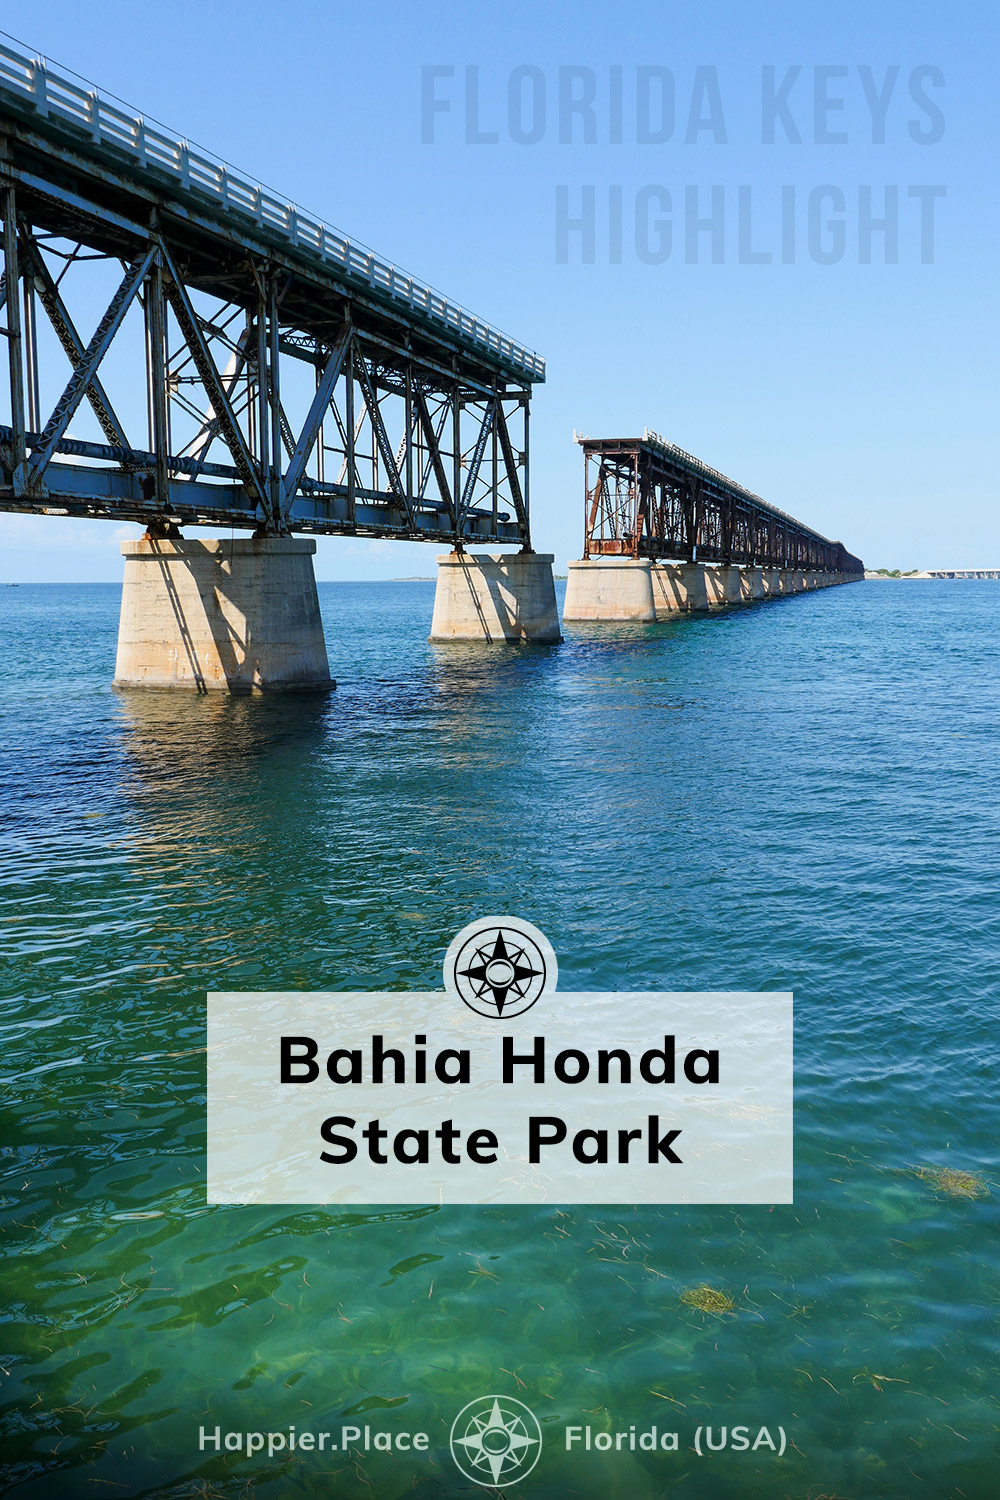 The 100-year old abandoned Bahia Honda Bridge, Florida Keys Highlight, Bahia Honda State Park, Happier Place, Florida, USA, clear blue and green water, near Key West